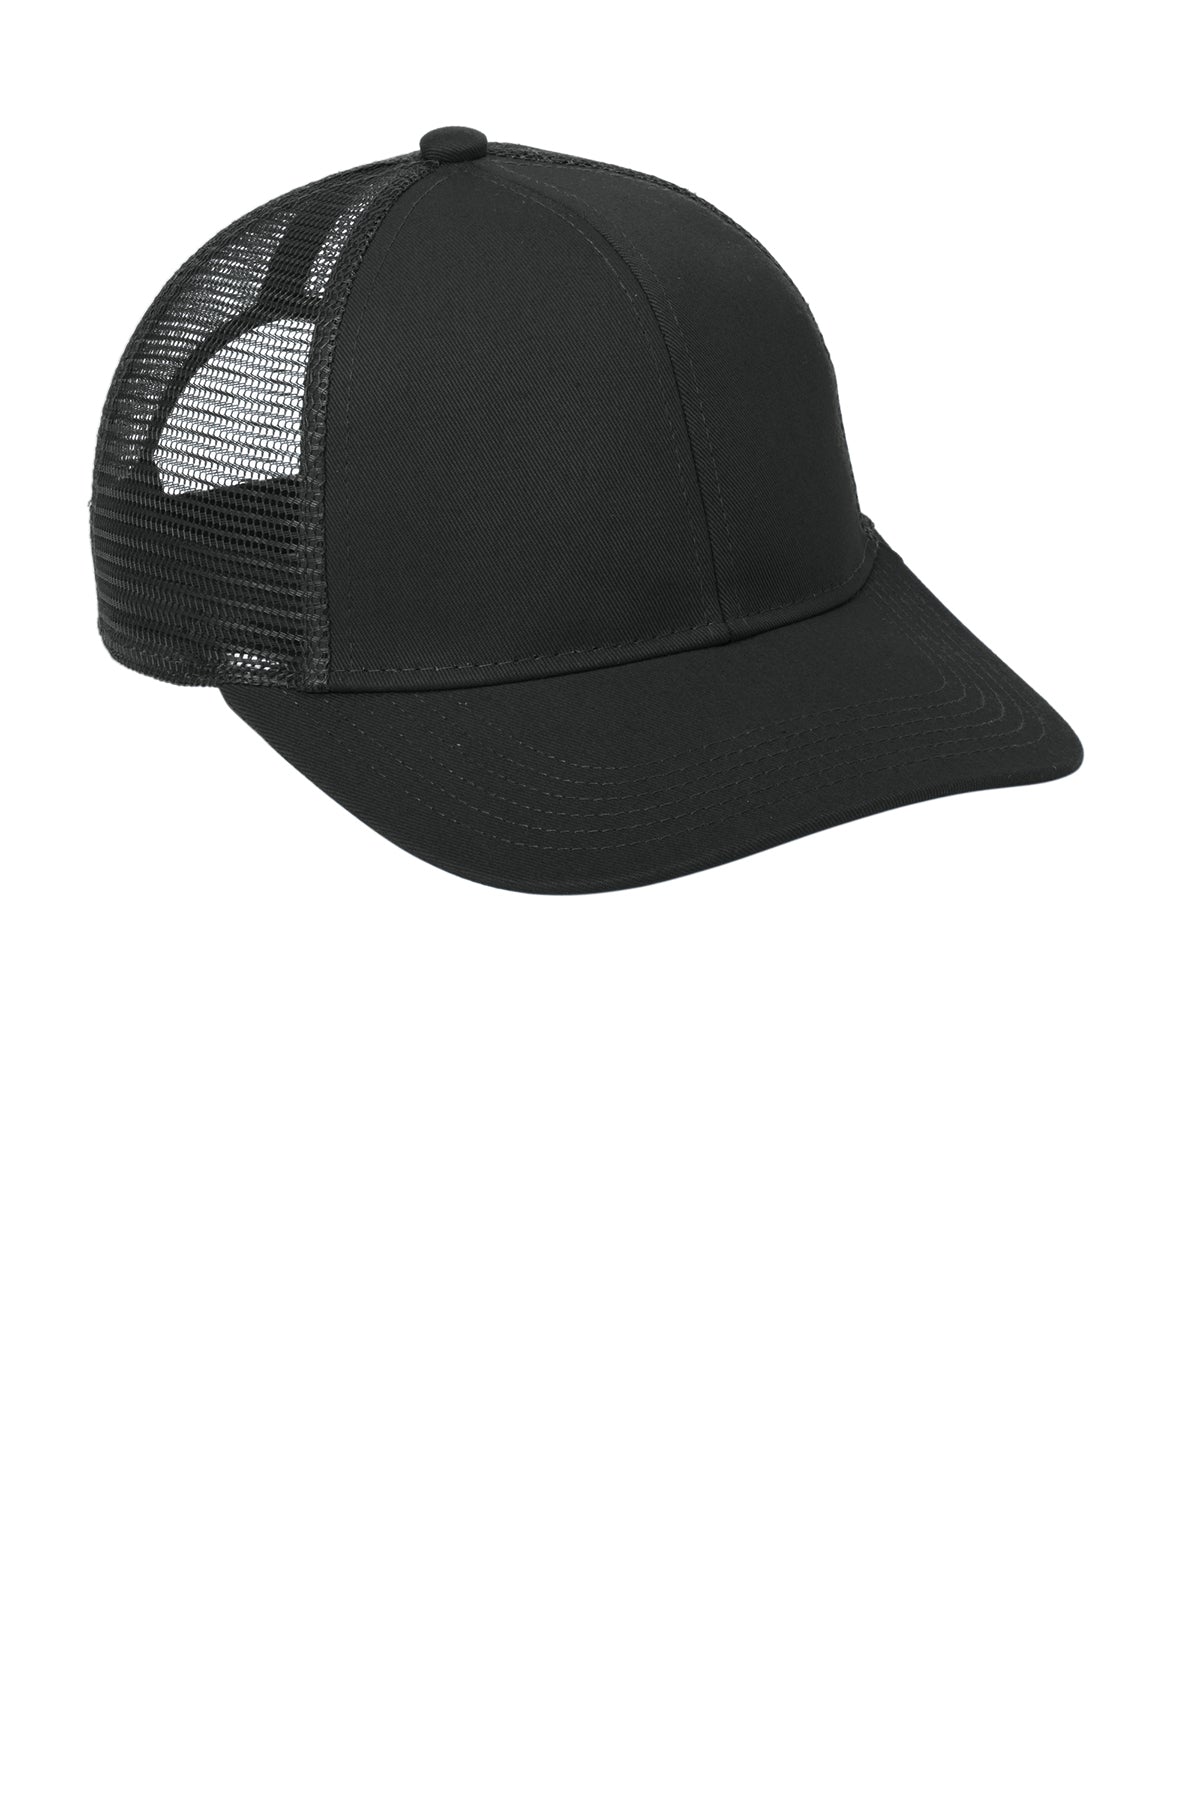 Port Authority Adjustable Mesh Back Branded Caps, Black